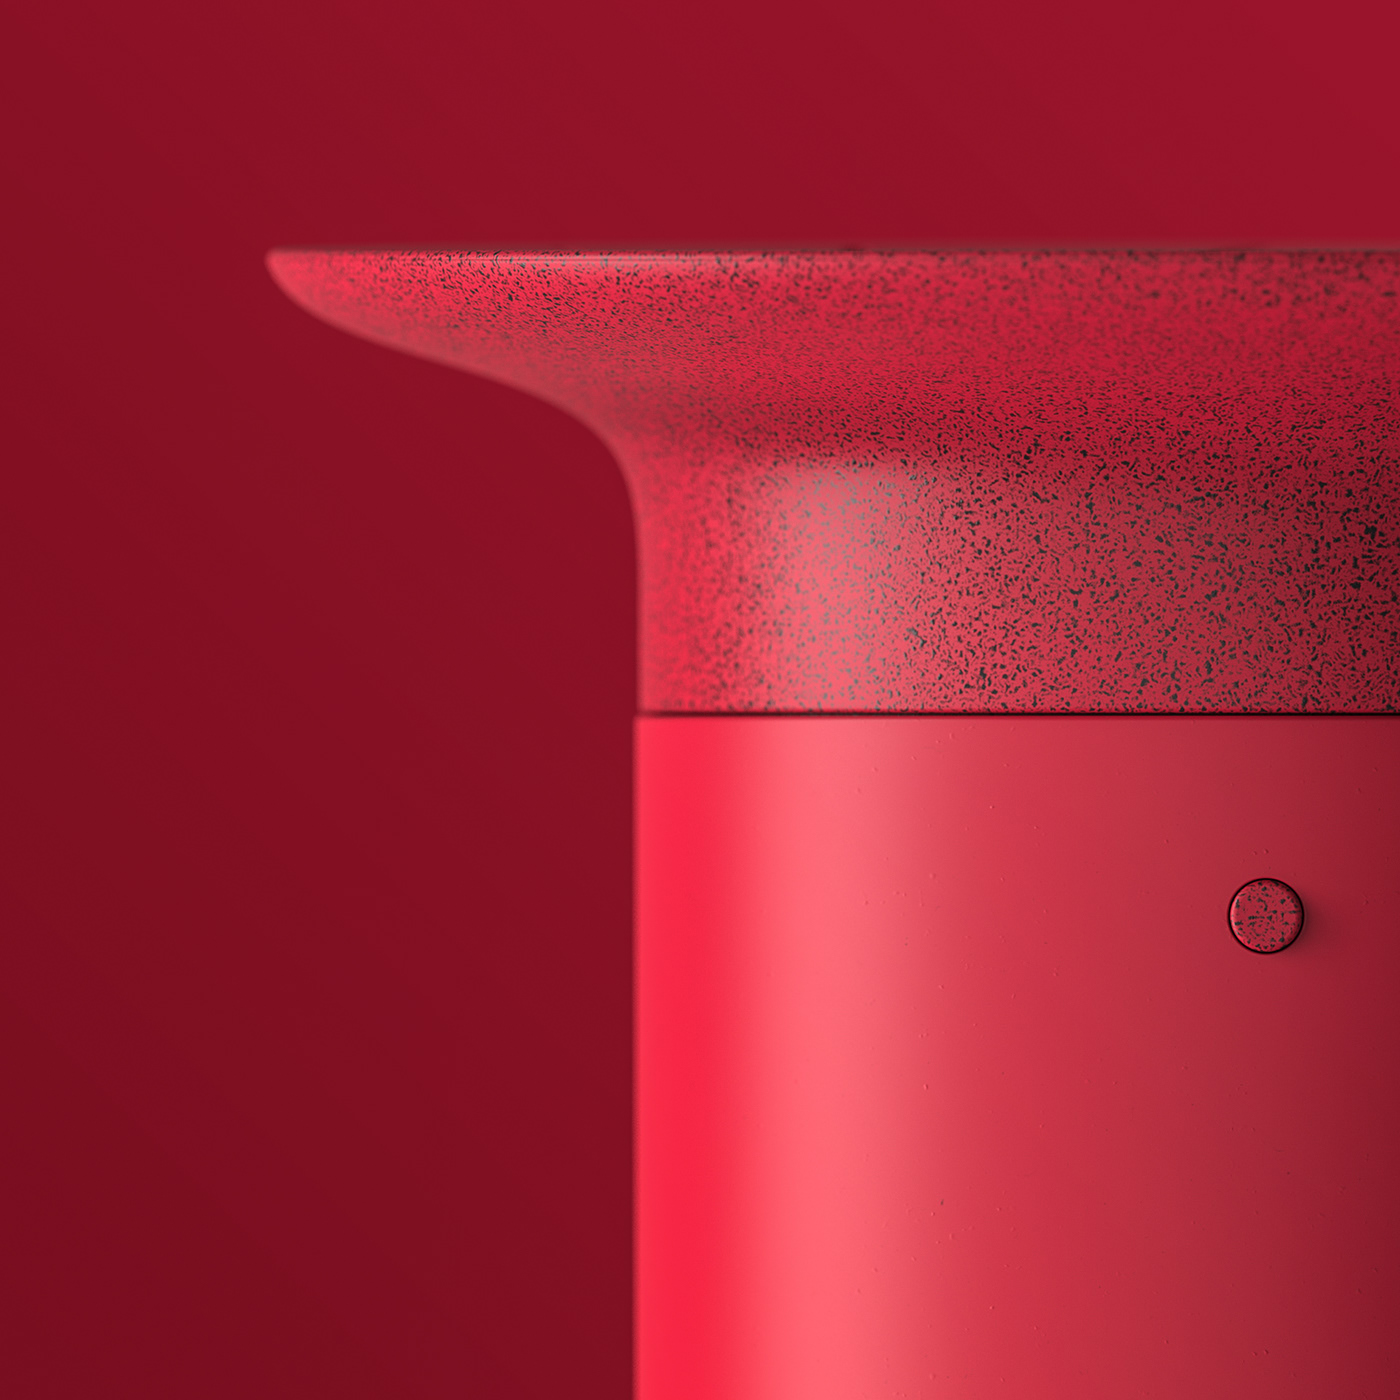 Pepper Shaker product design Render rendering 3D 3D model red modeling